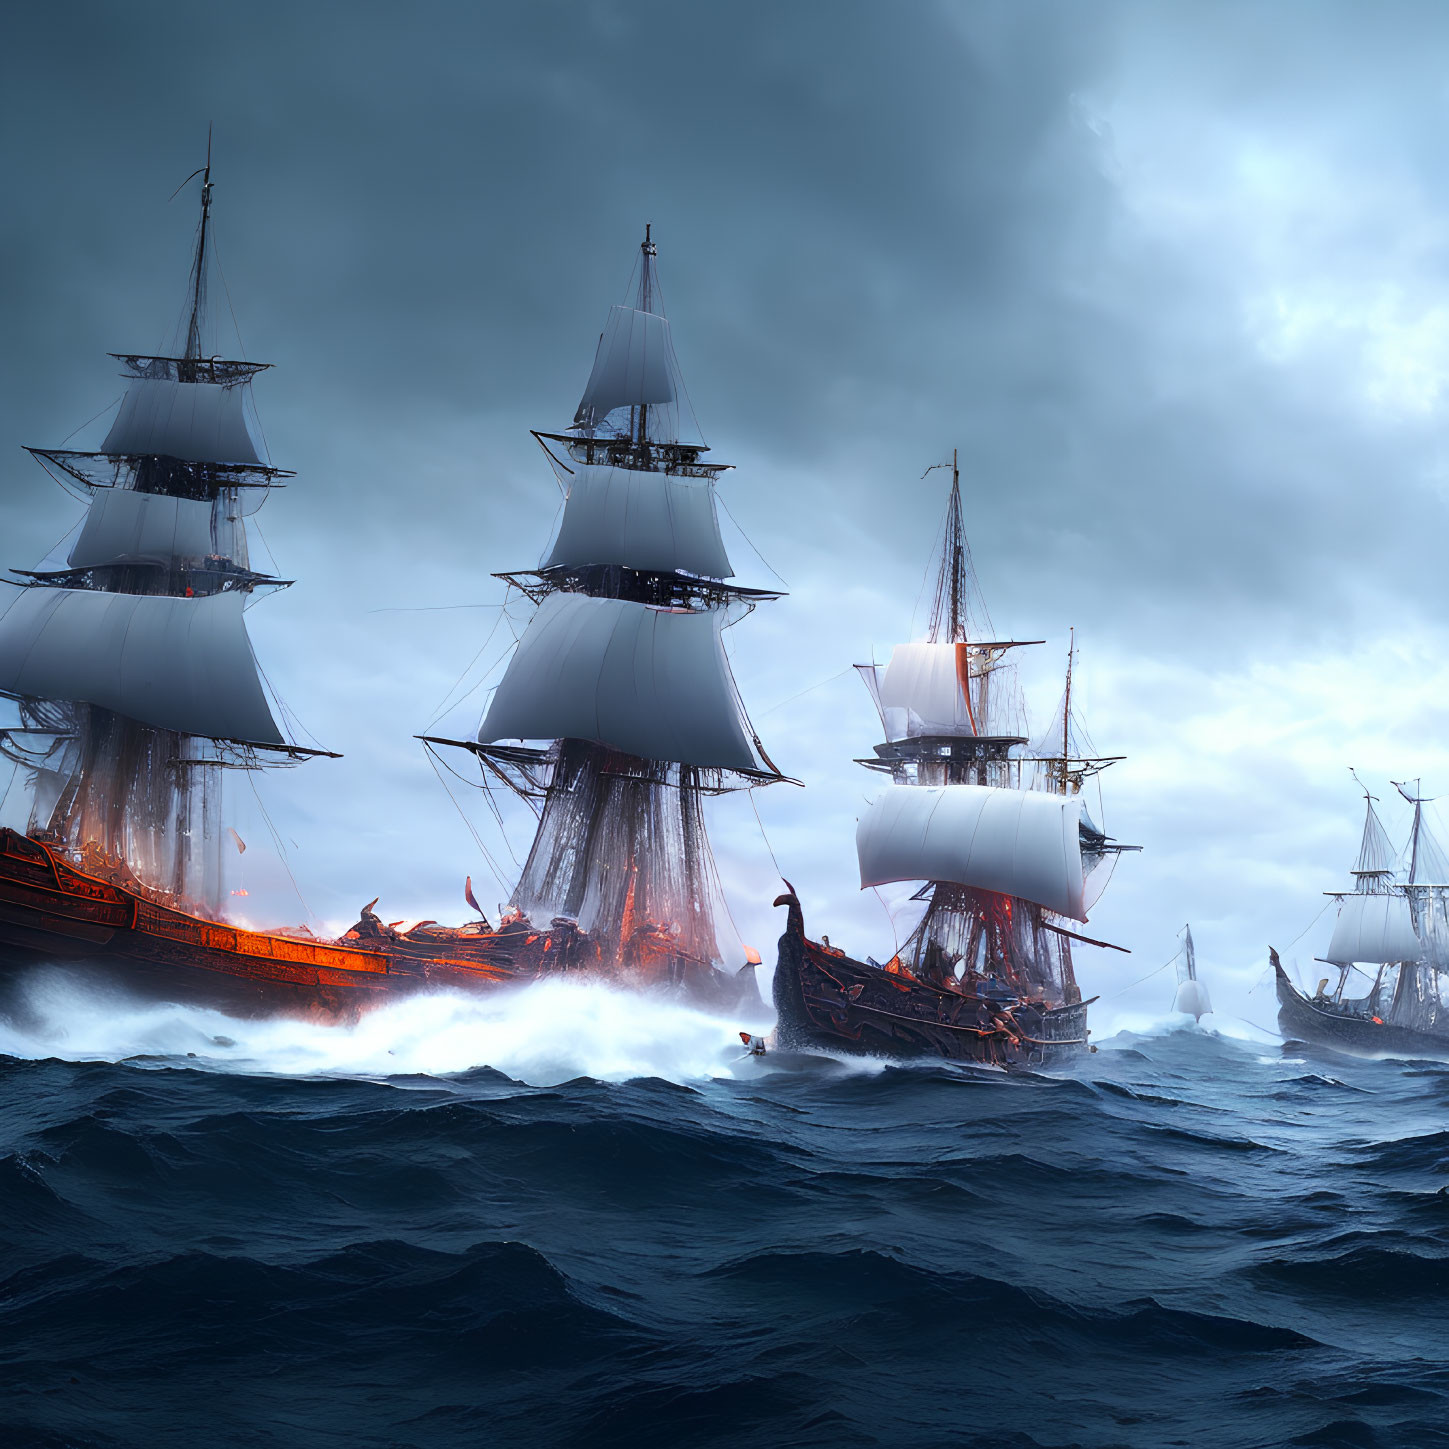 Naval battle scene: sailing ships in stormy sea, one ablaze